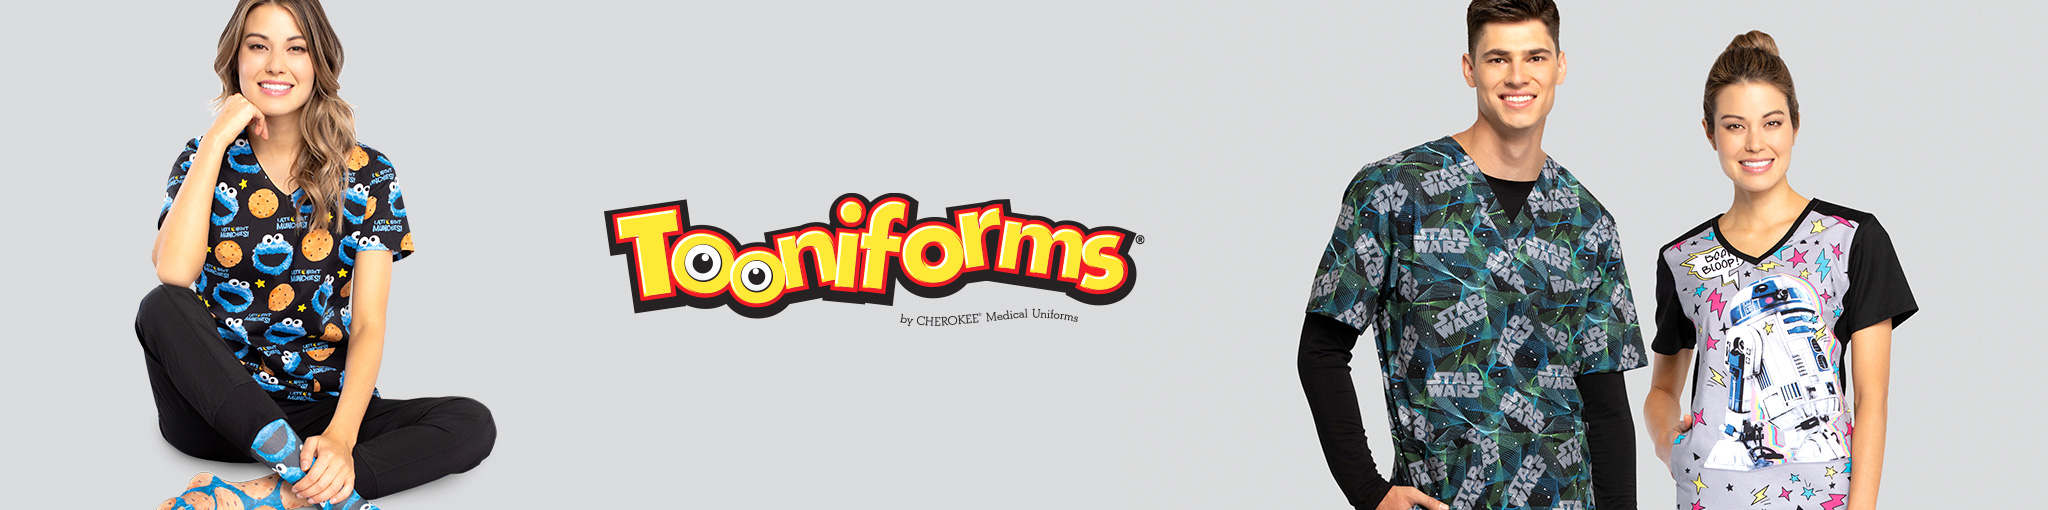 tooniforms